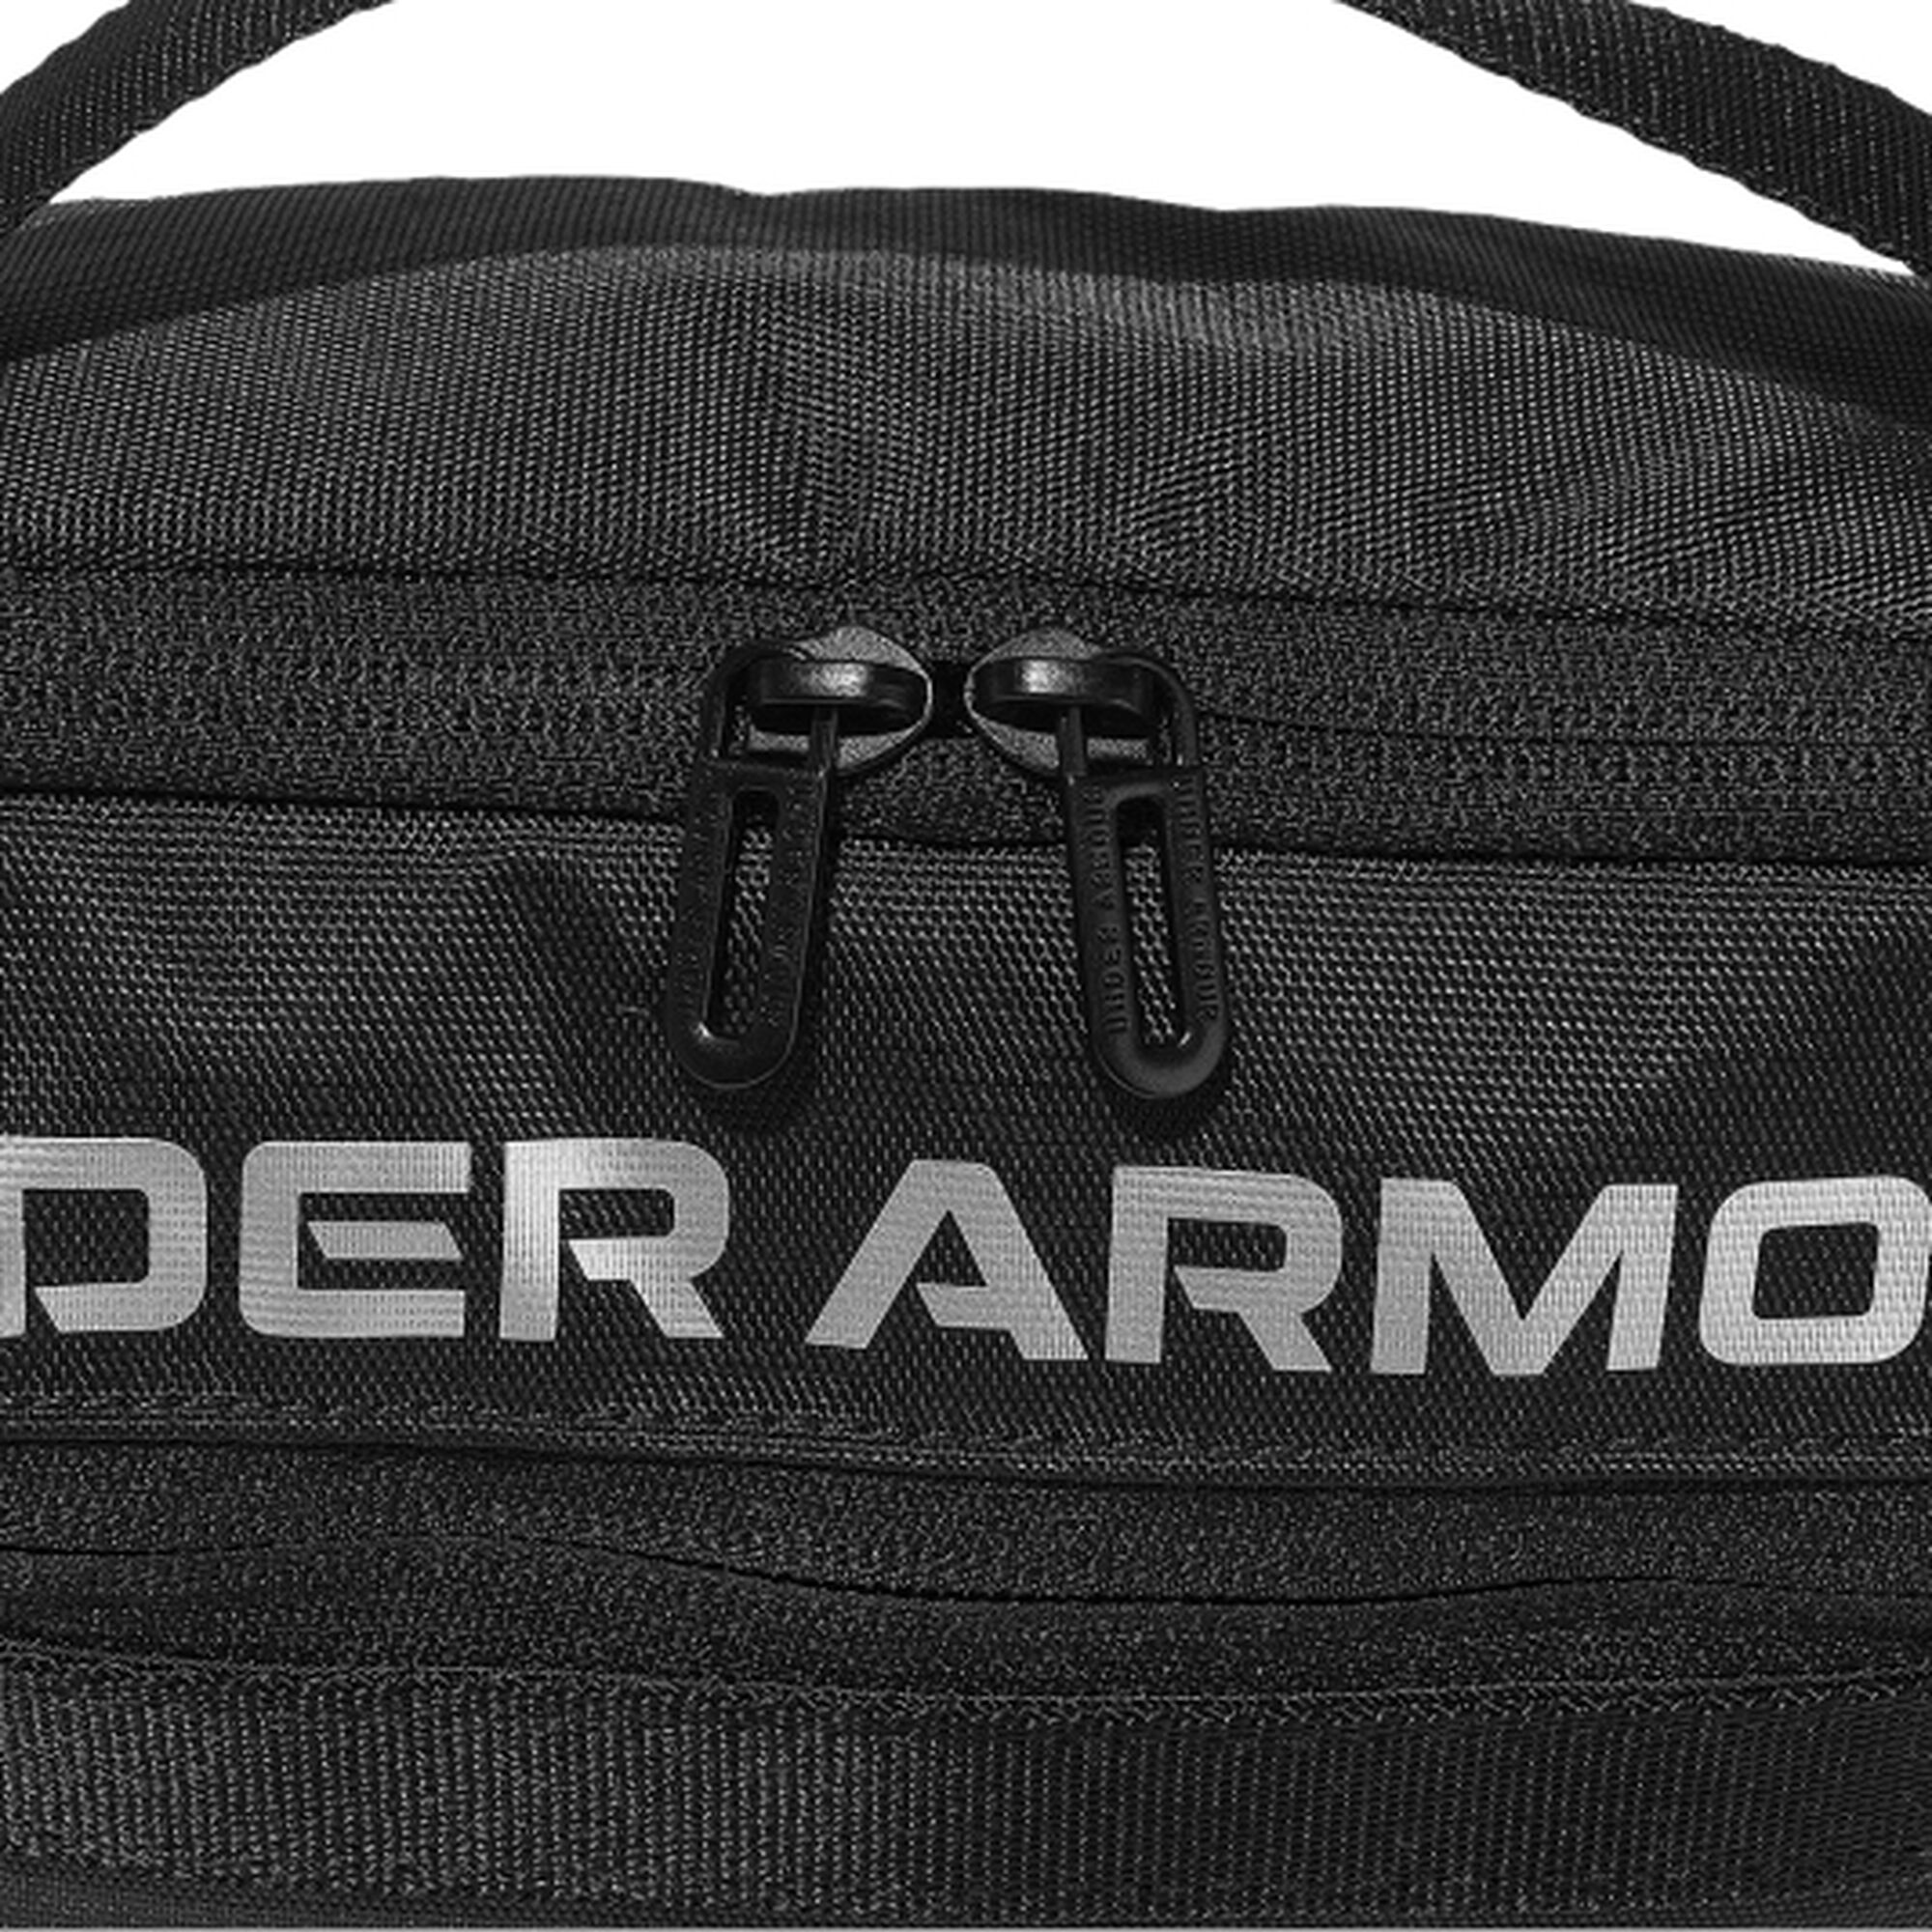 Travel bag Under Armor Contain Travel Kit Black Unisex